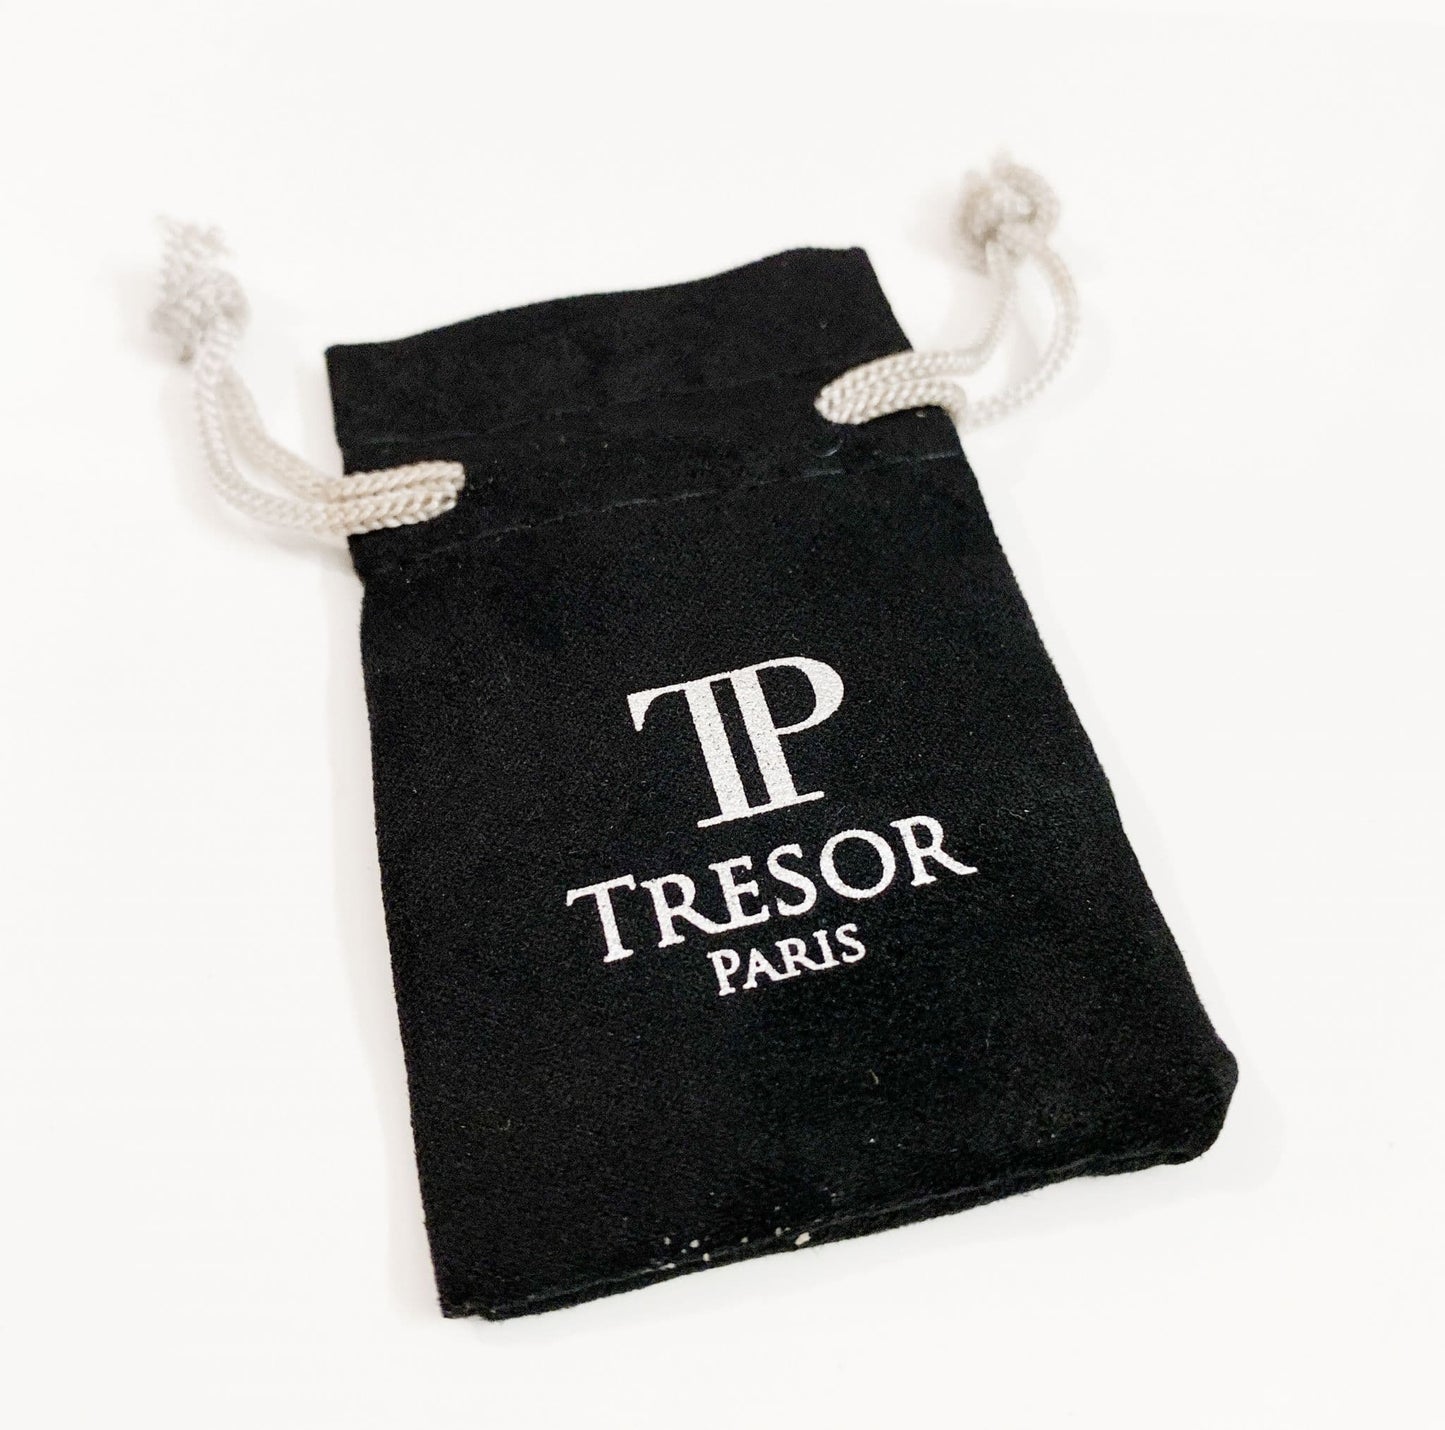 Tresor Paris material pouch